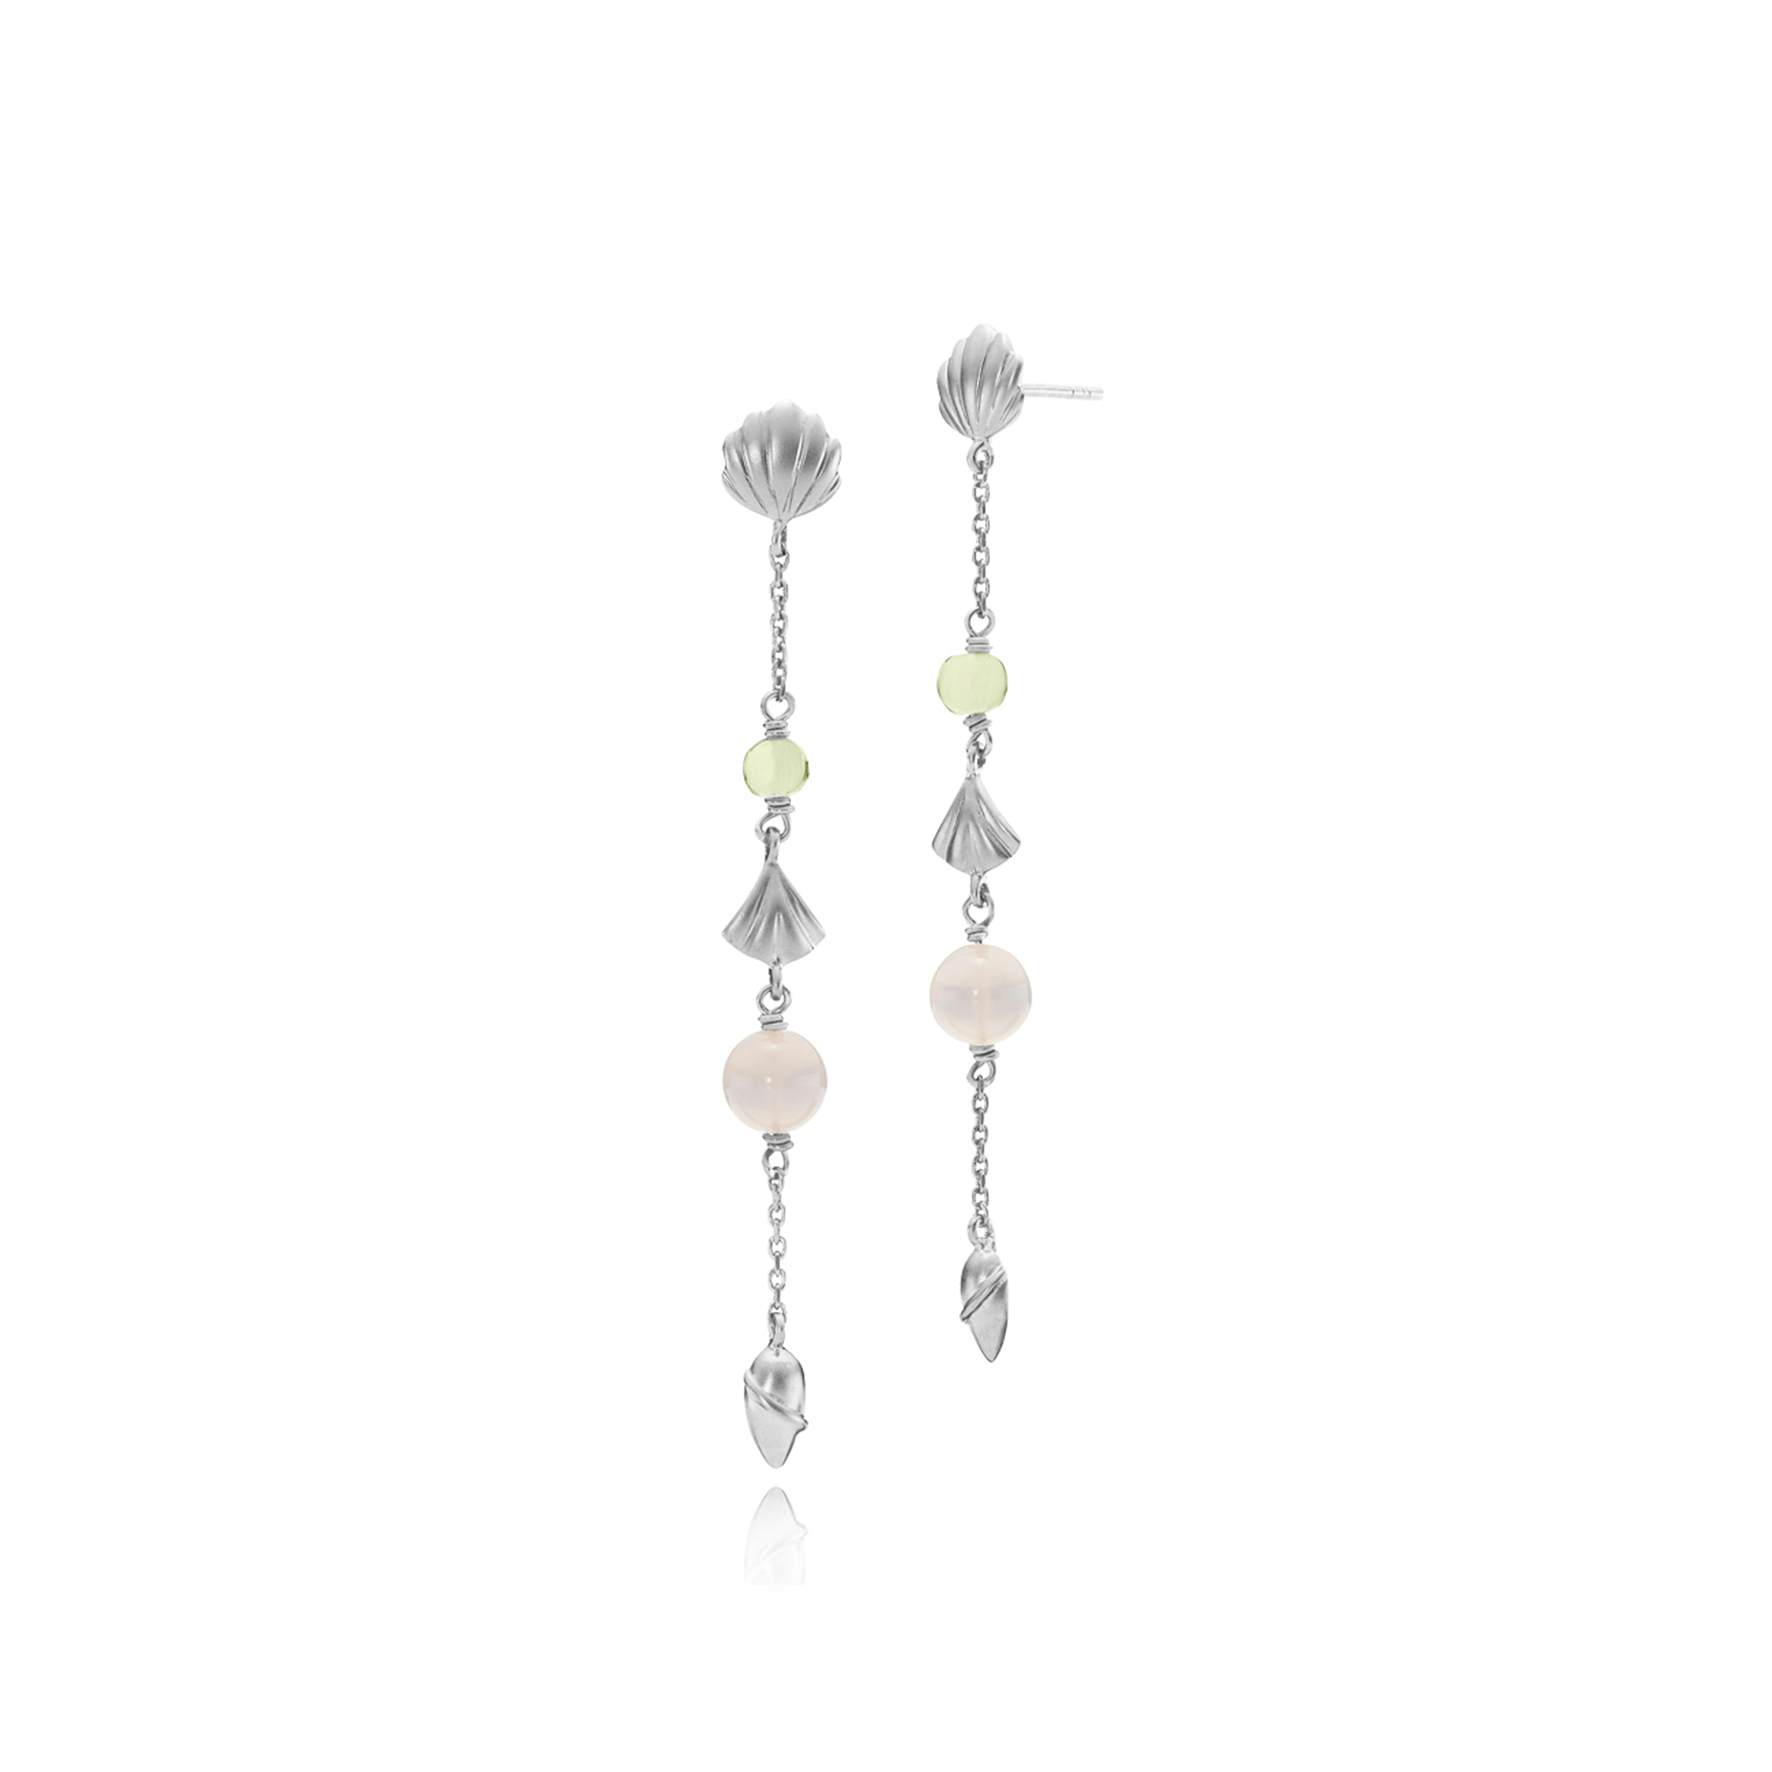 Isabella Pink/Green Long Earrings från Izabel Camille i Silver Sterling 925